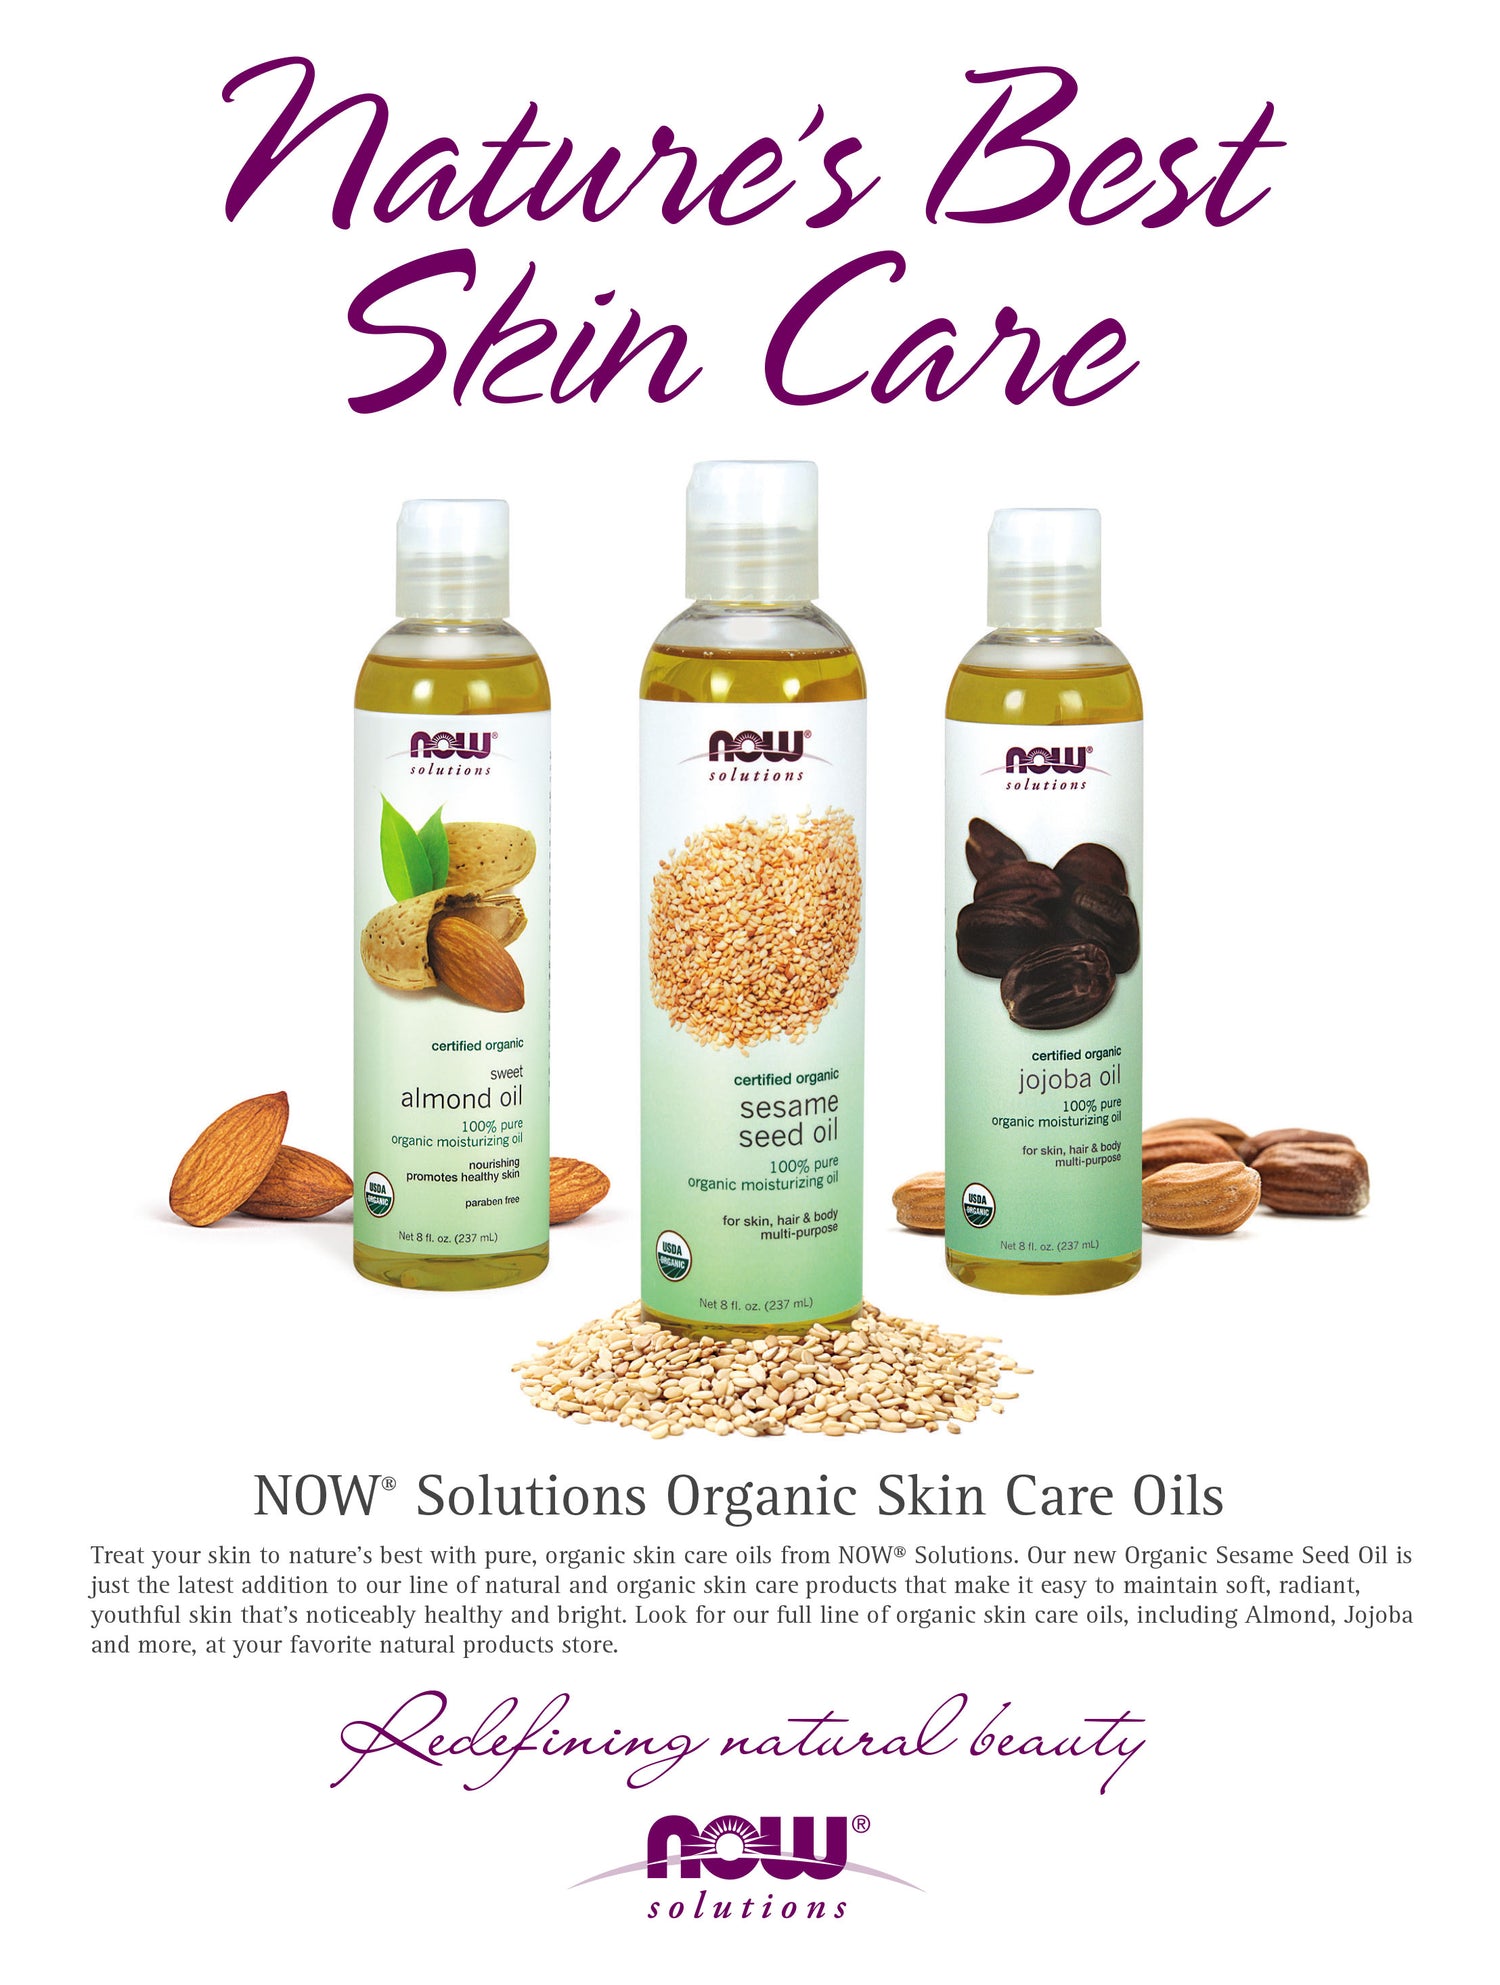 NOW Solutions, Organic Castor Oil, 100% Pure Versatile Skin Care, Multi-Purpose Skin Softener, 8-Ounce (237 ml) - Bloom Concept